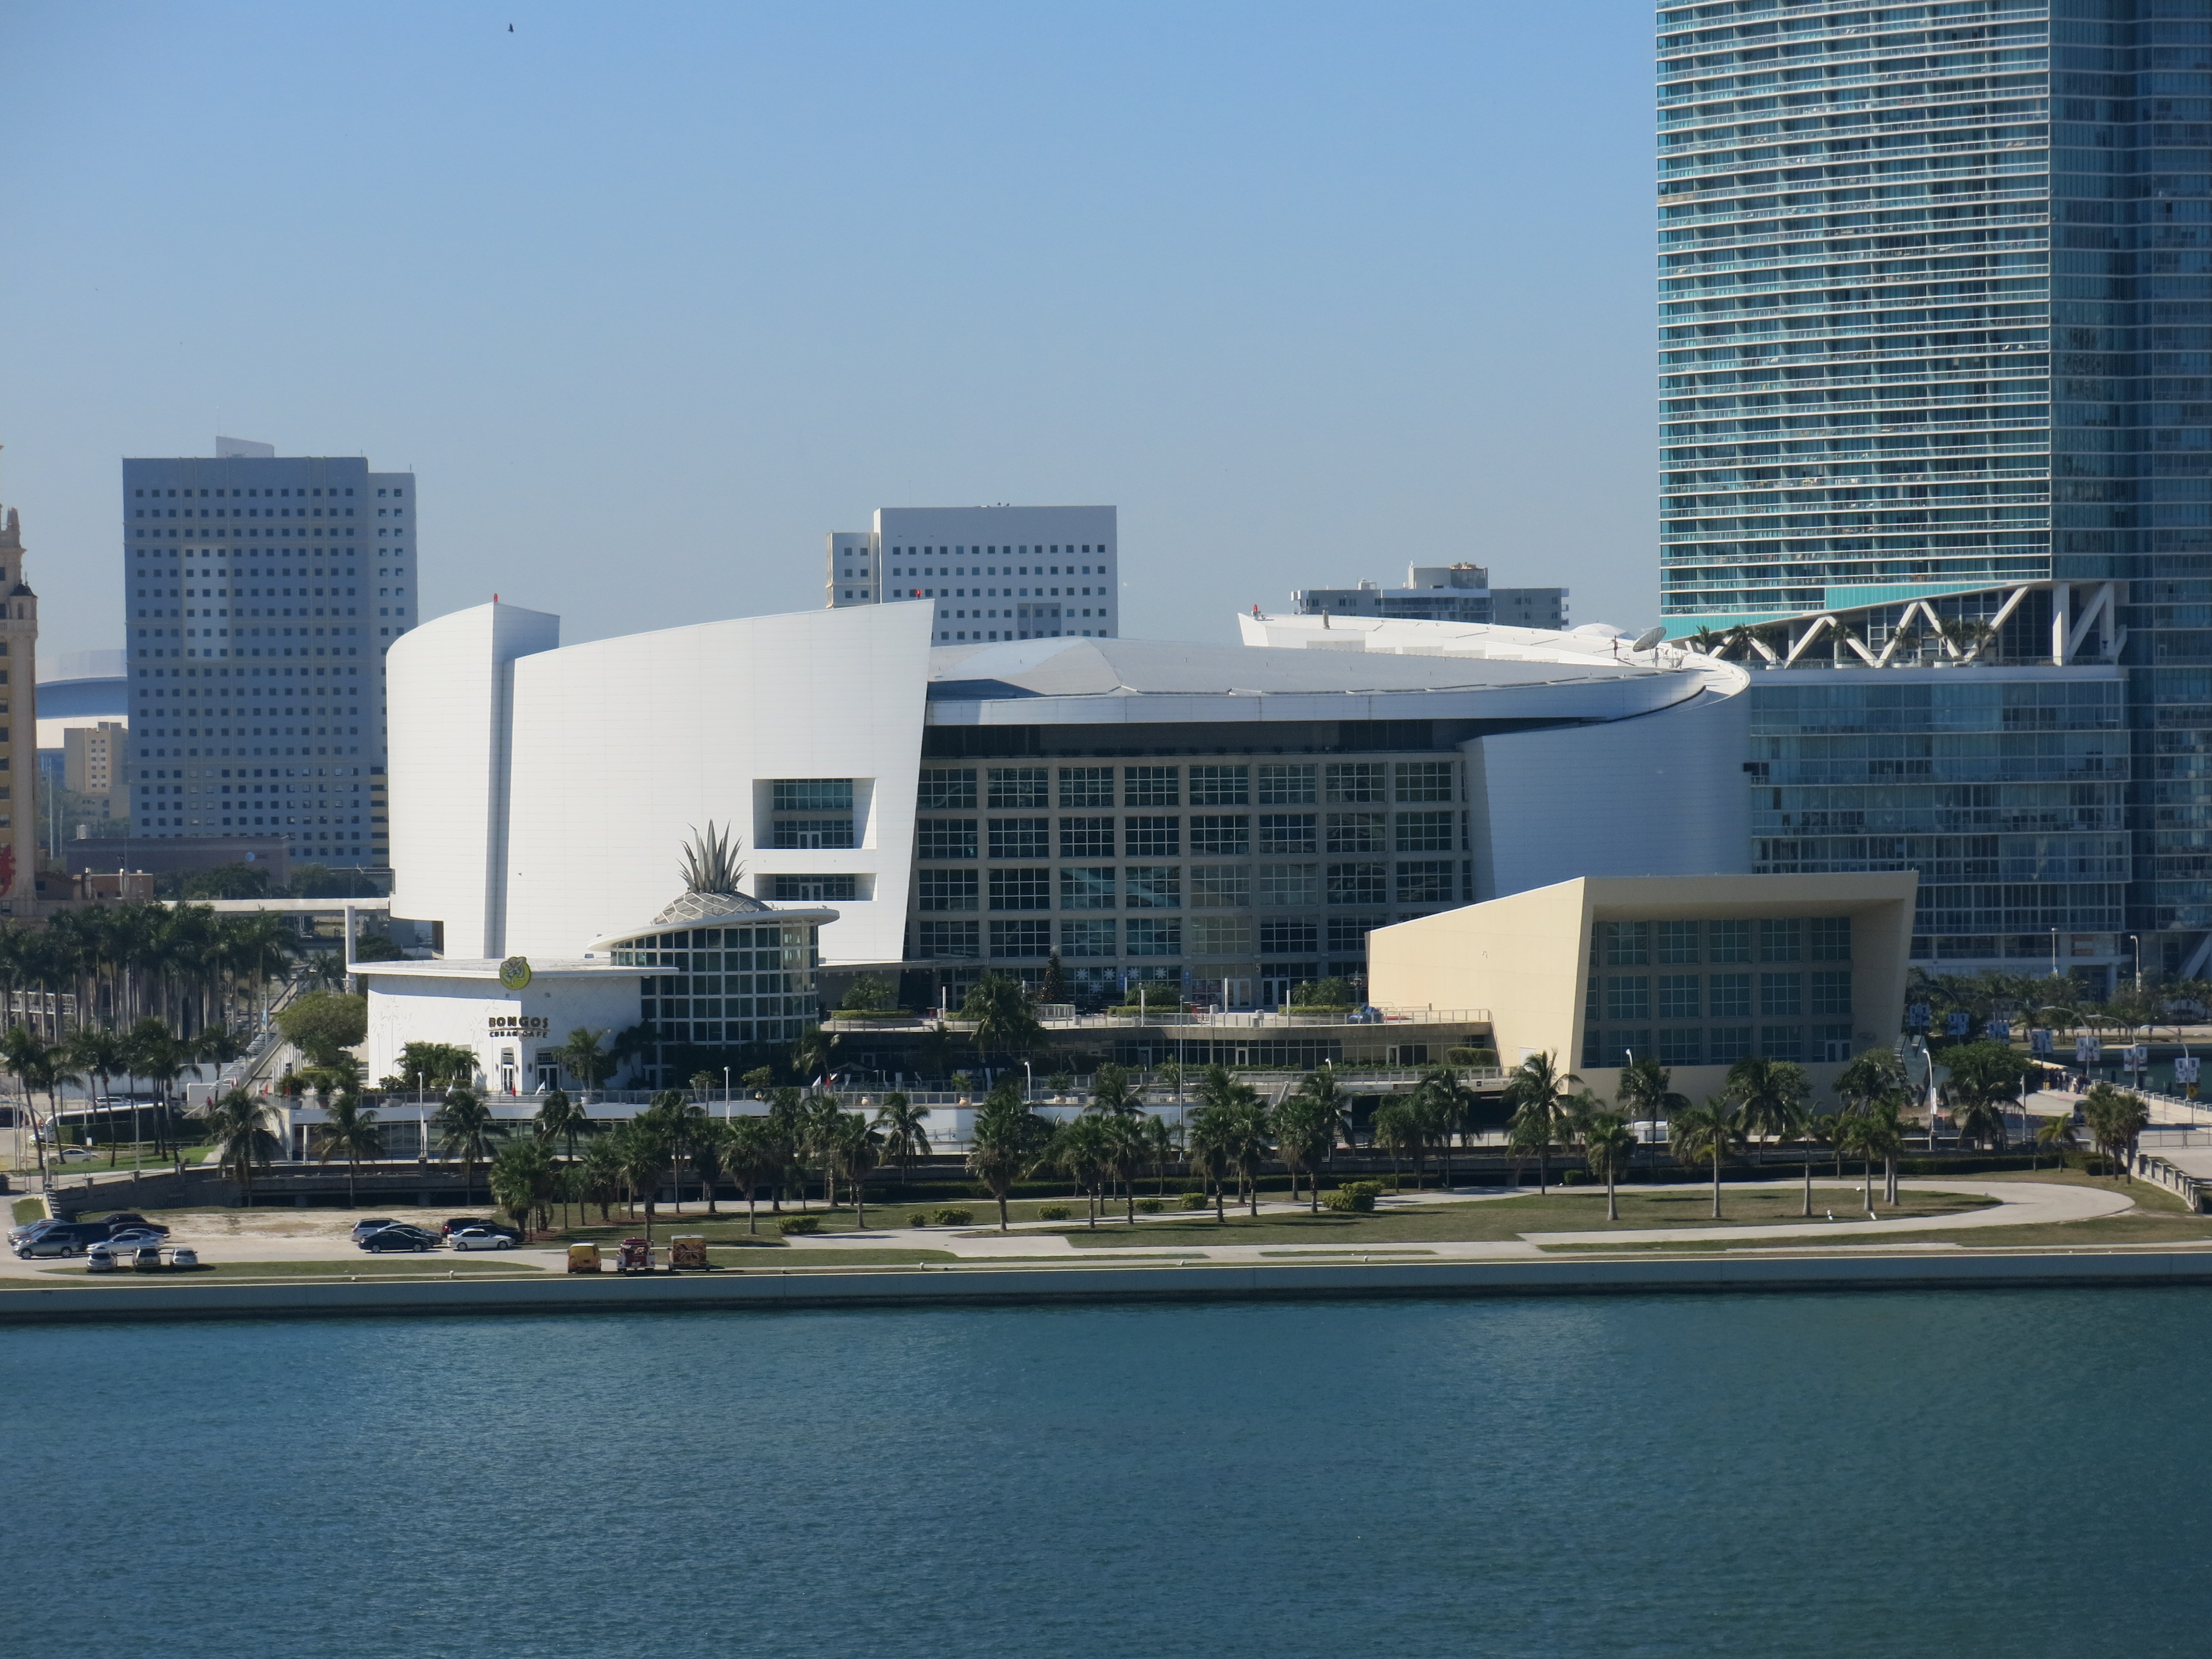 Miami Heat Arena